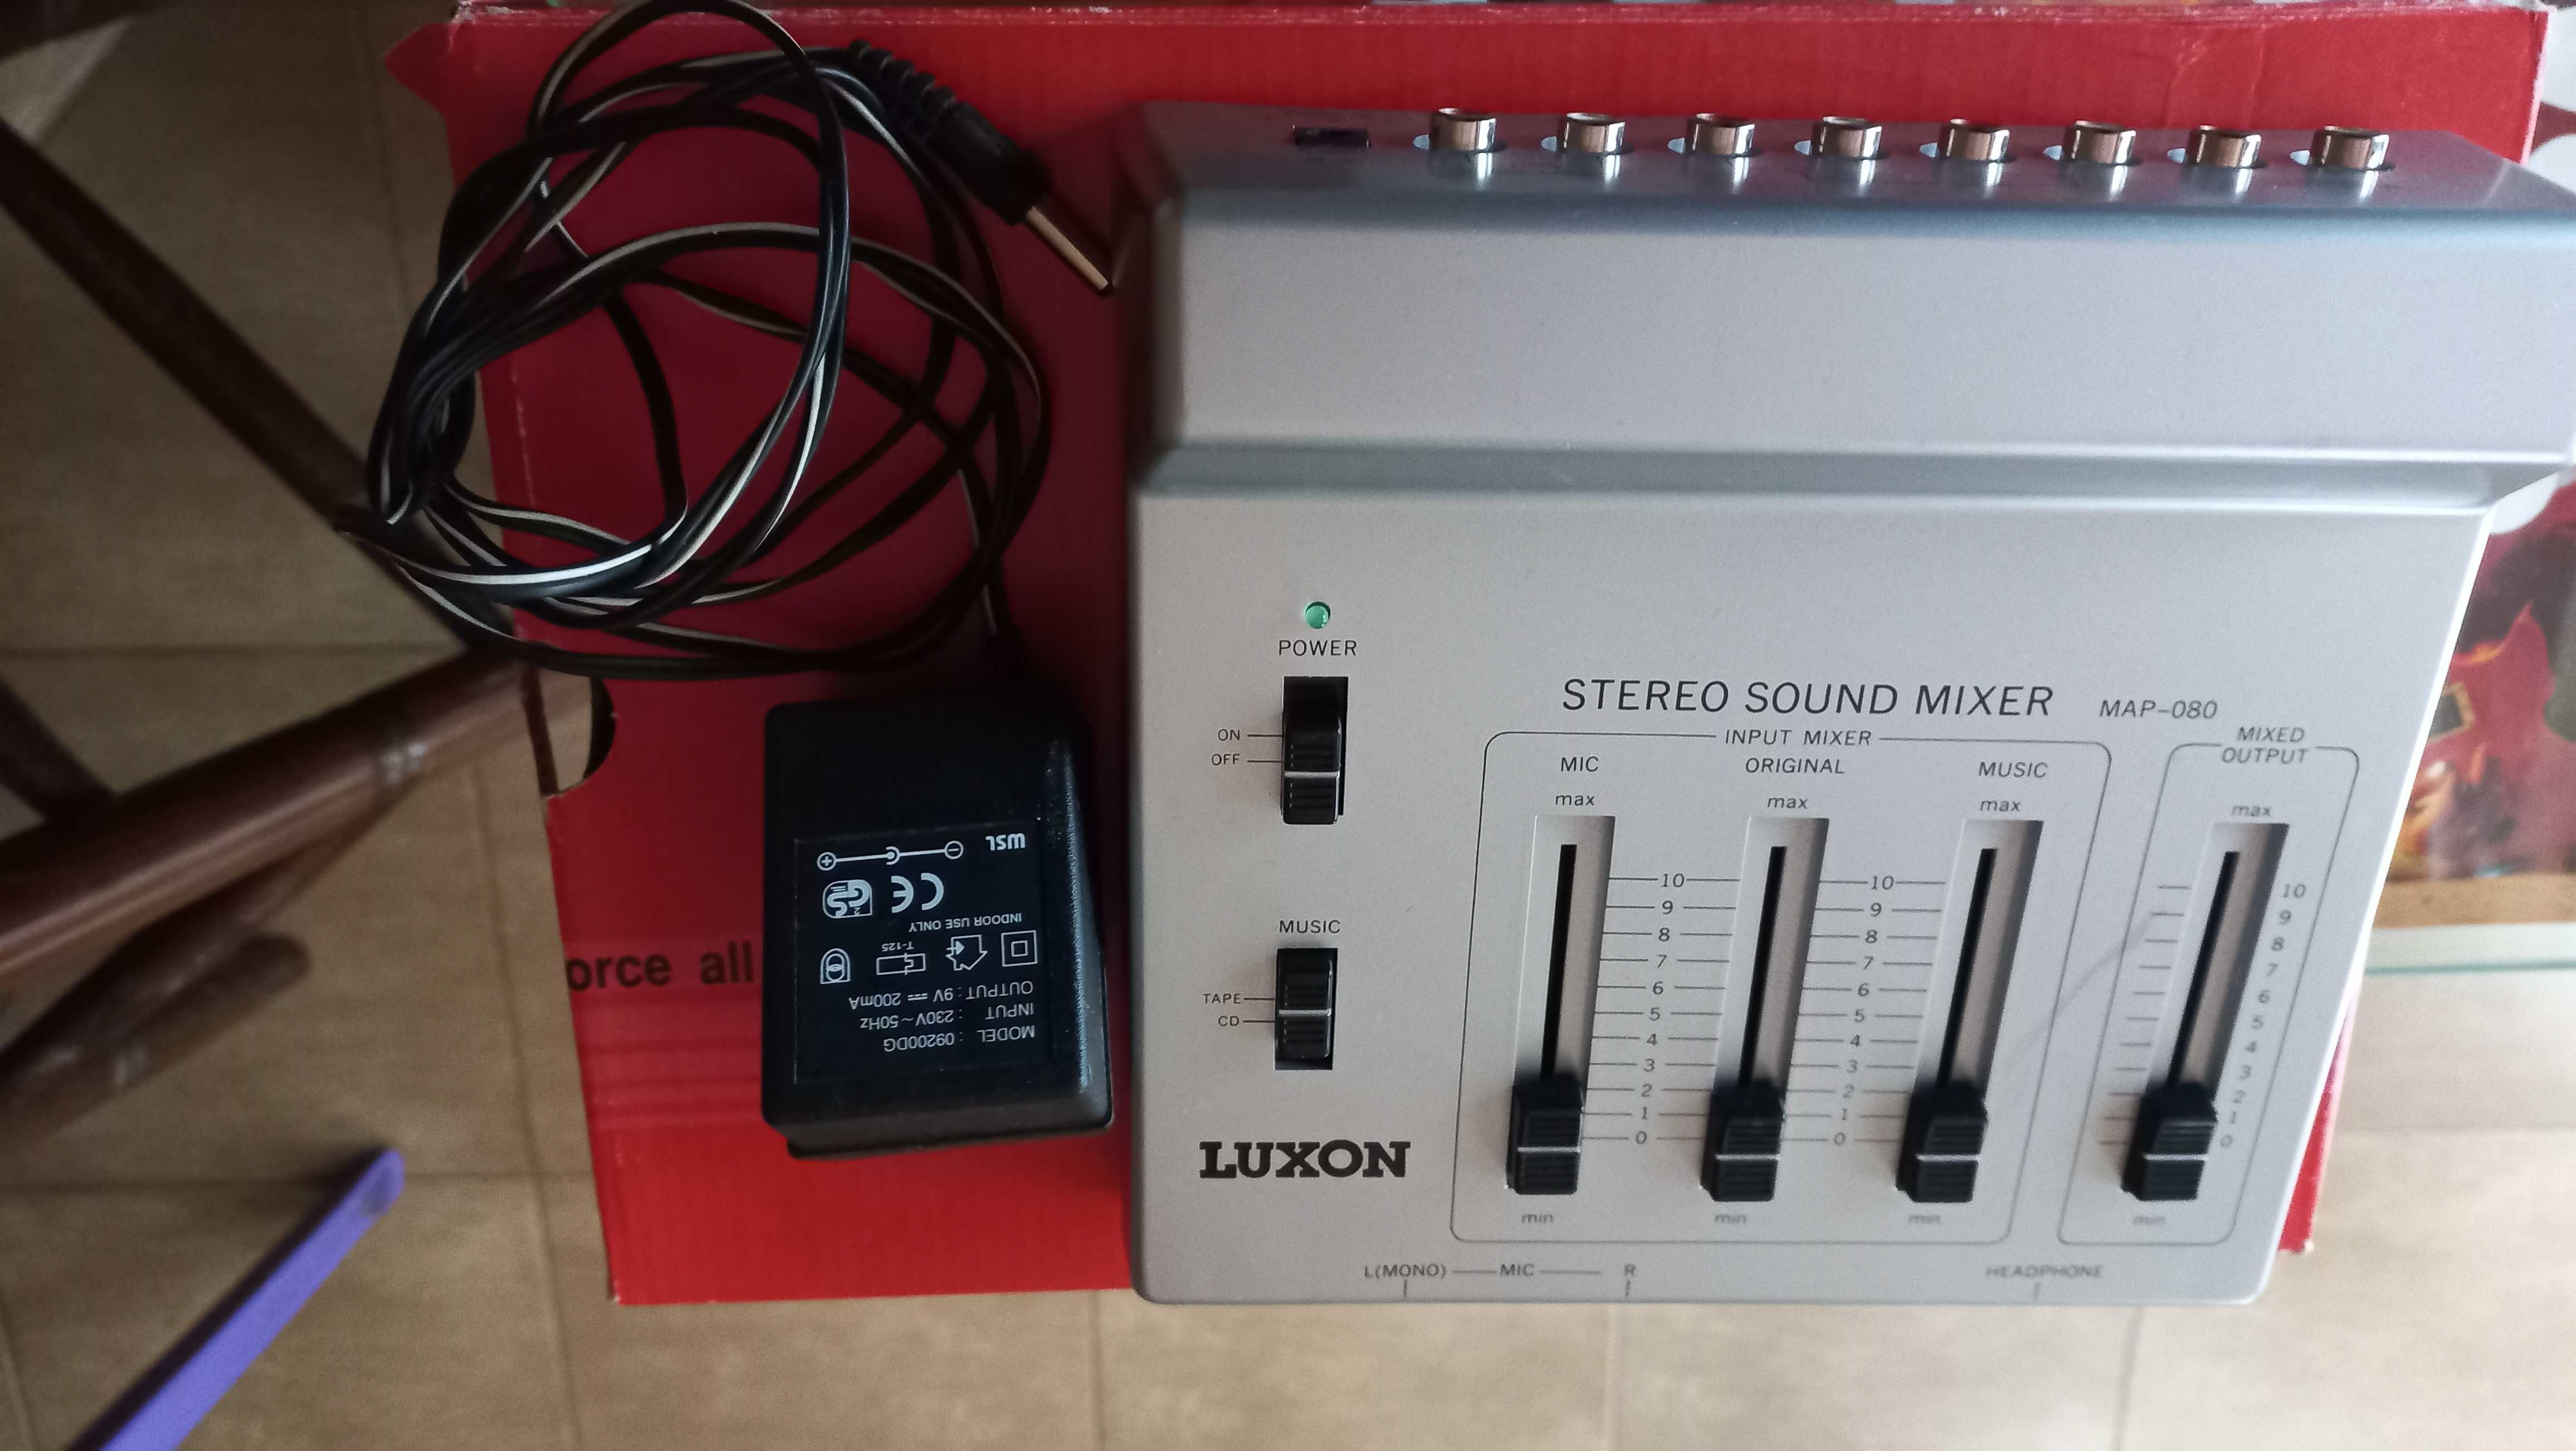 Stereo mixer '' LUXON '' - MAP 080